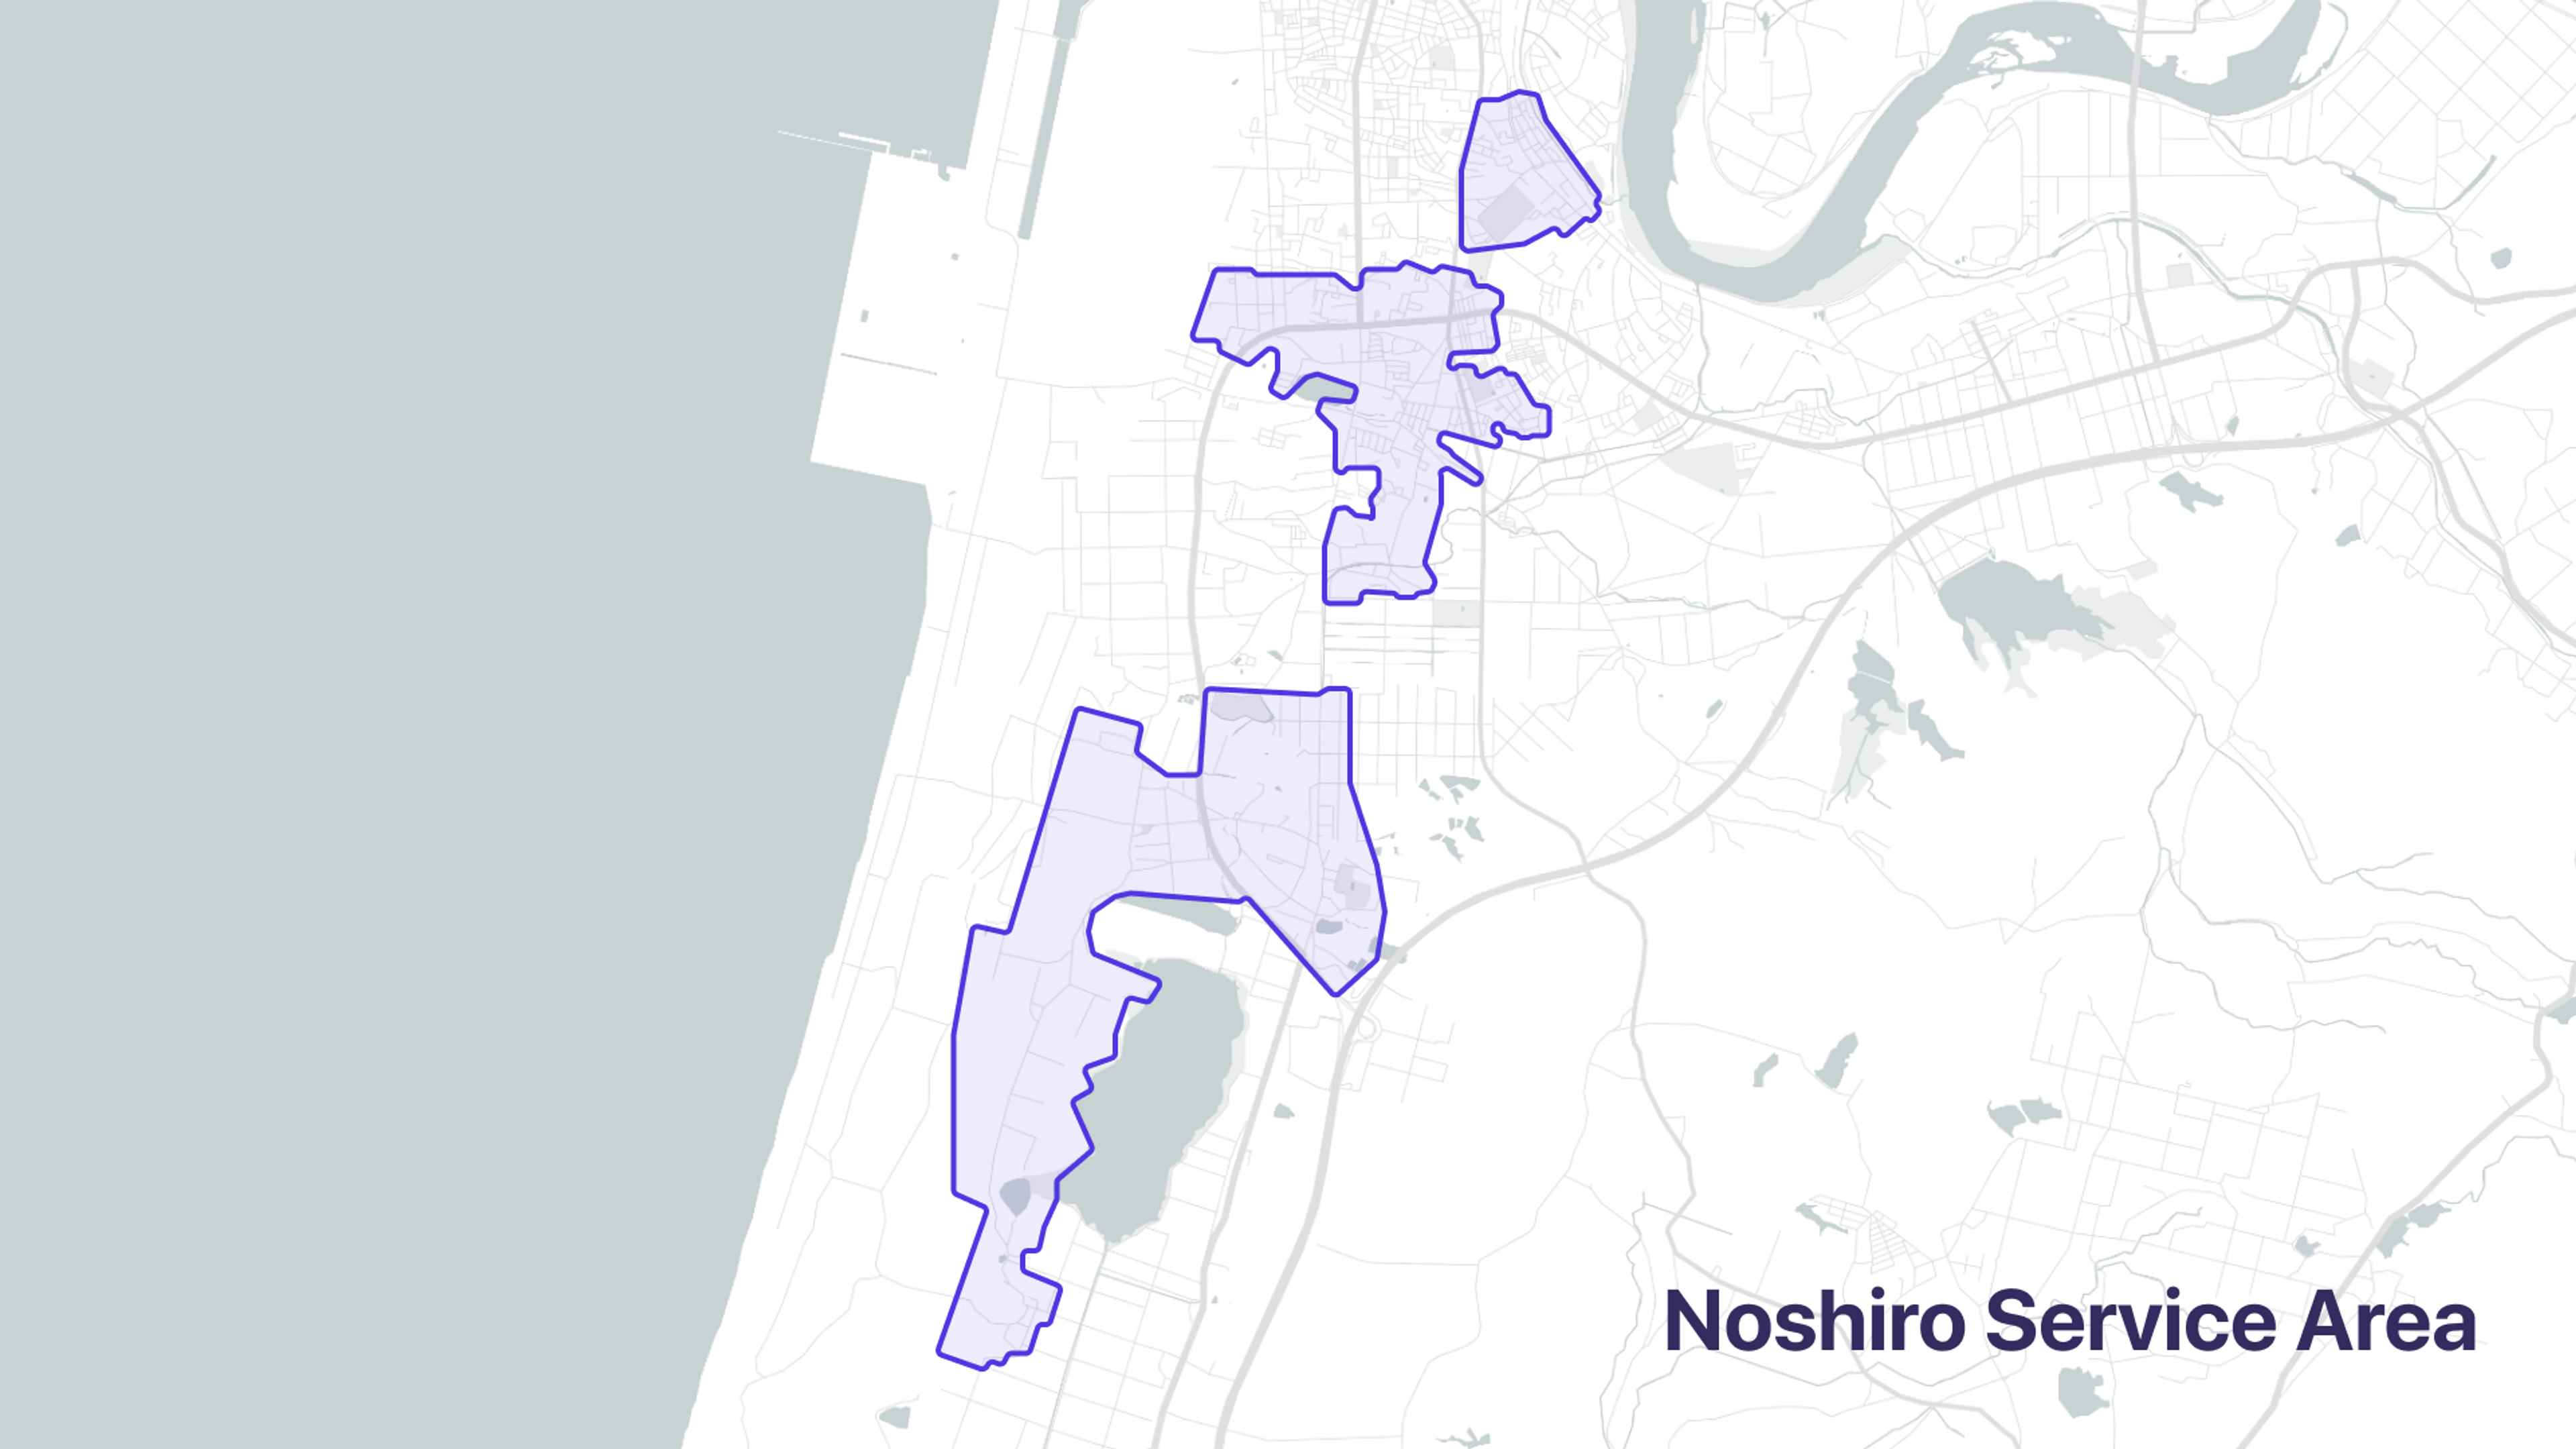 Noshiro service area